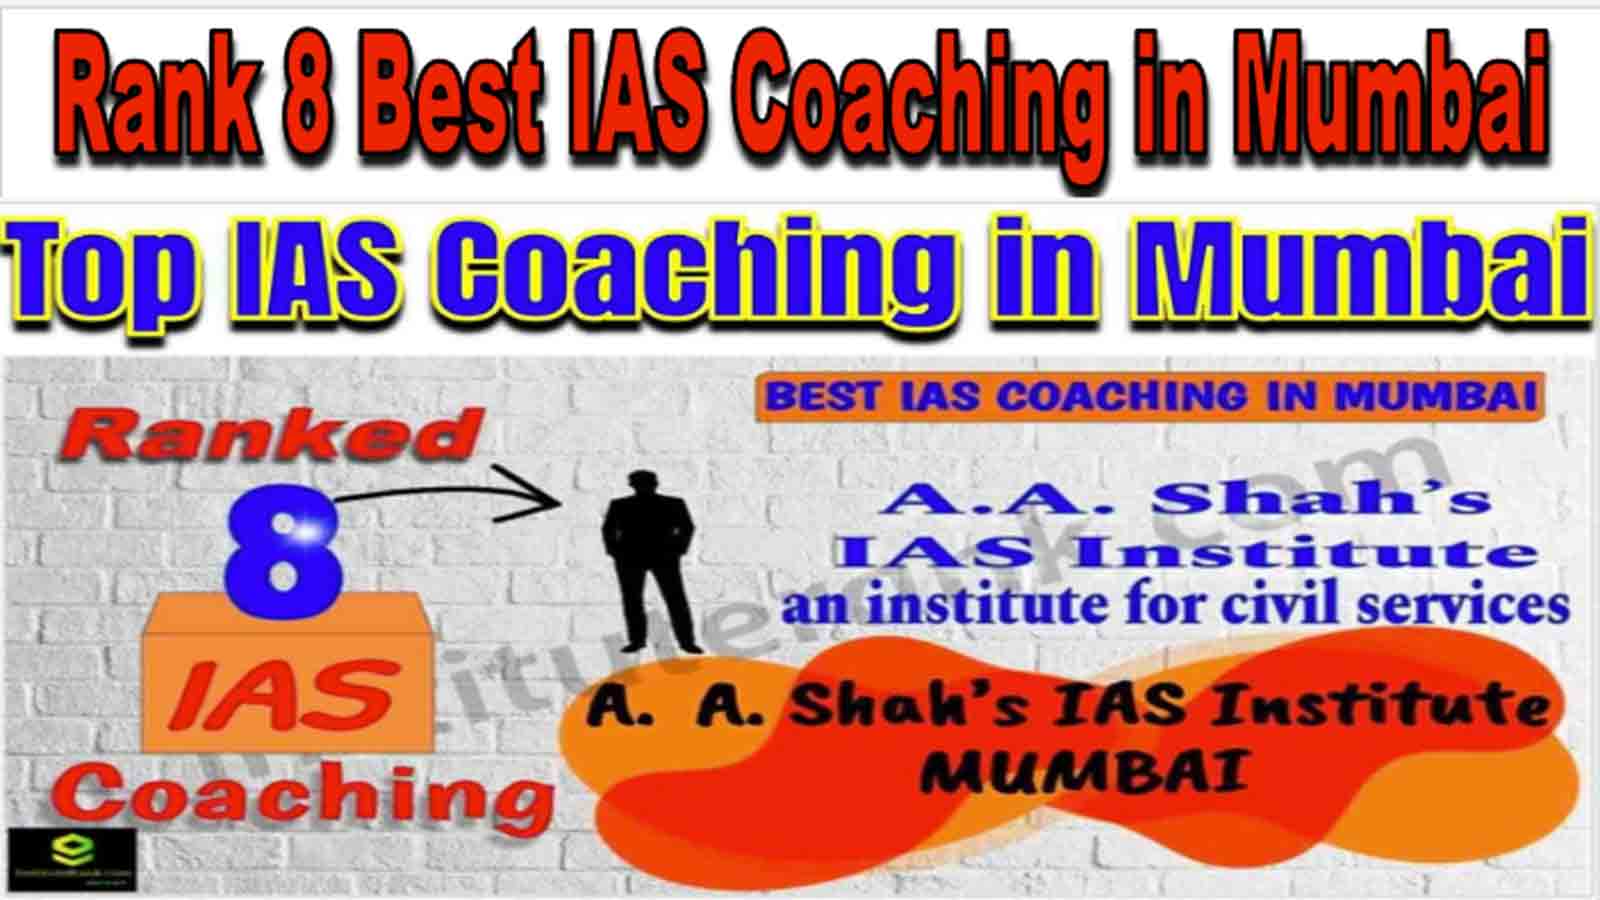 Rank 8 Best IAS Coaching in Mumbai